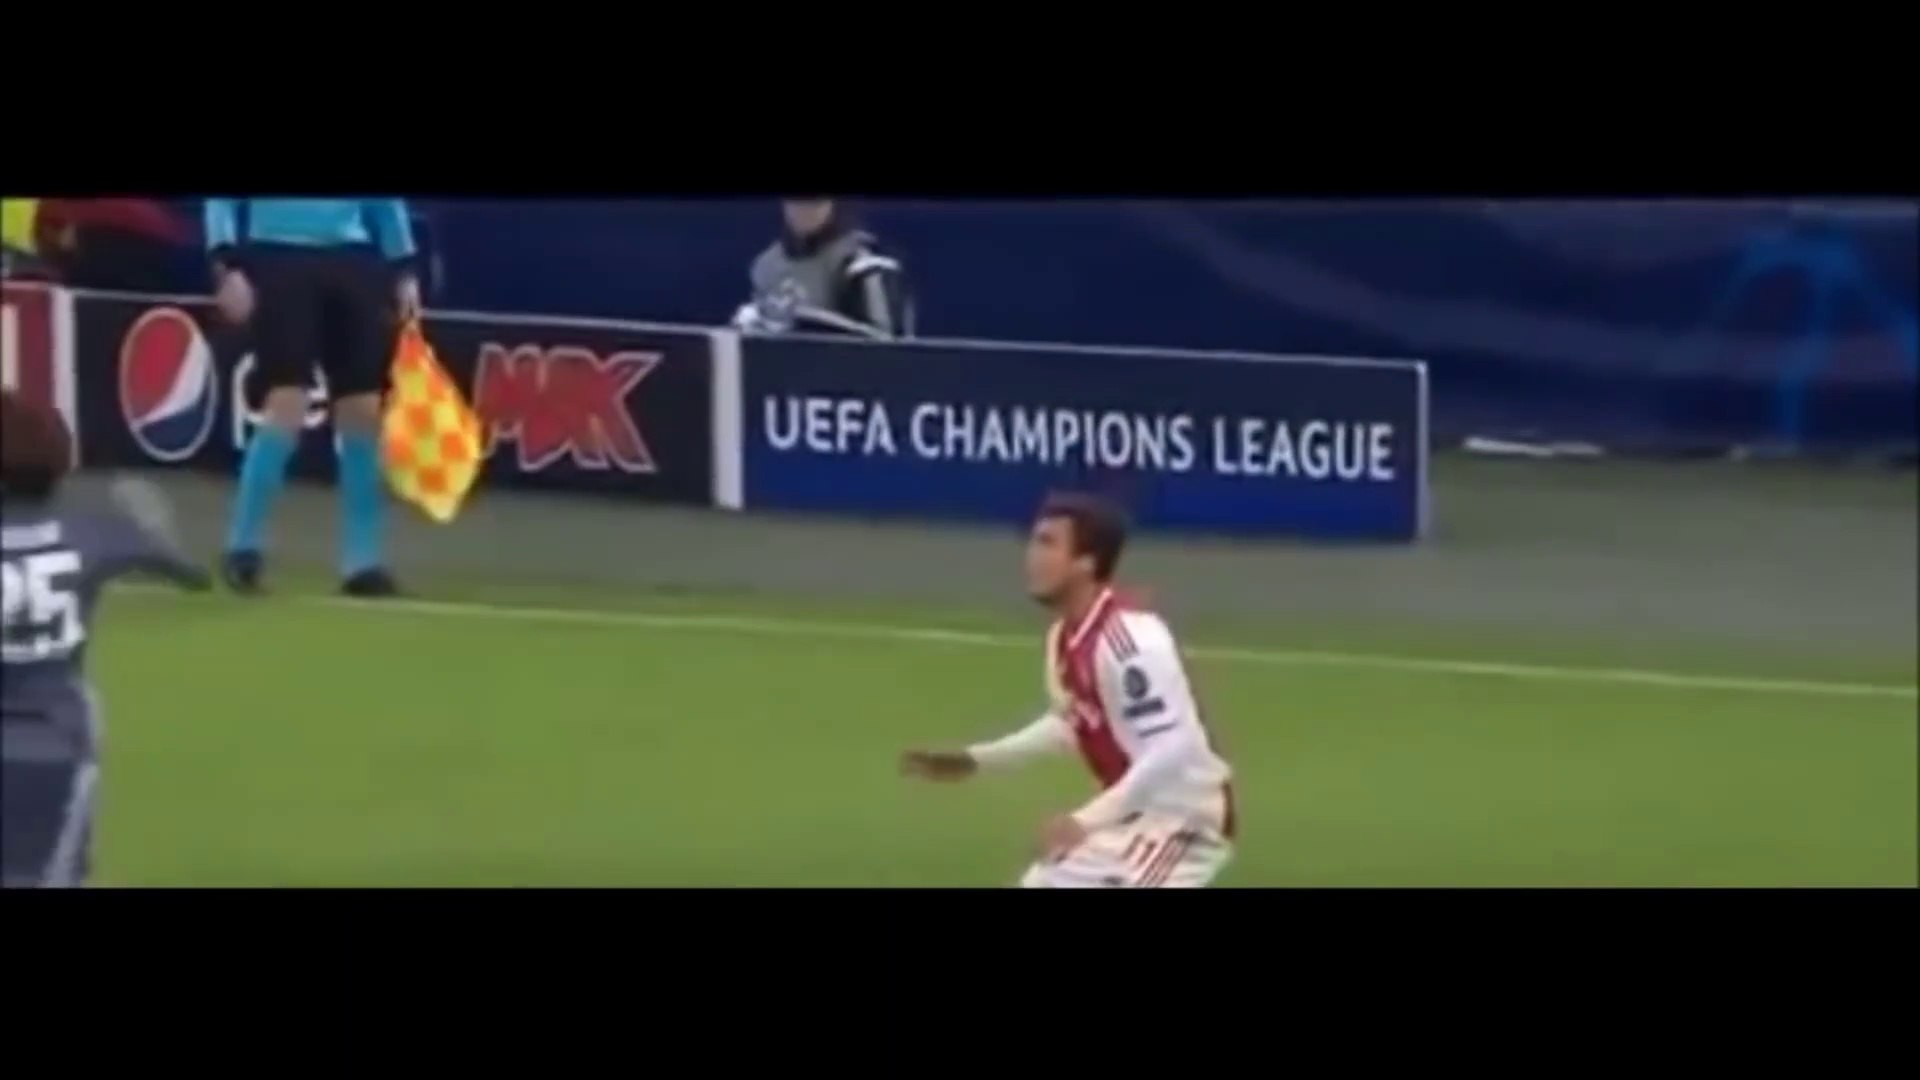 Thomas Müller sees red card for karate kick - Ajax vs Bayern 3:3 12.12.2018 - video